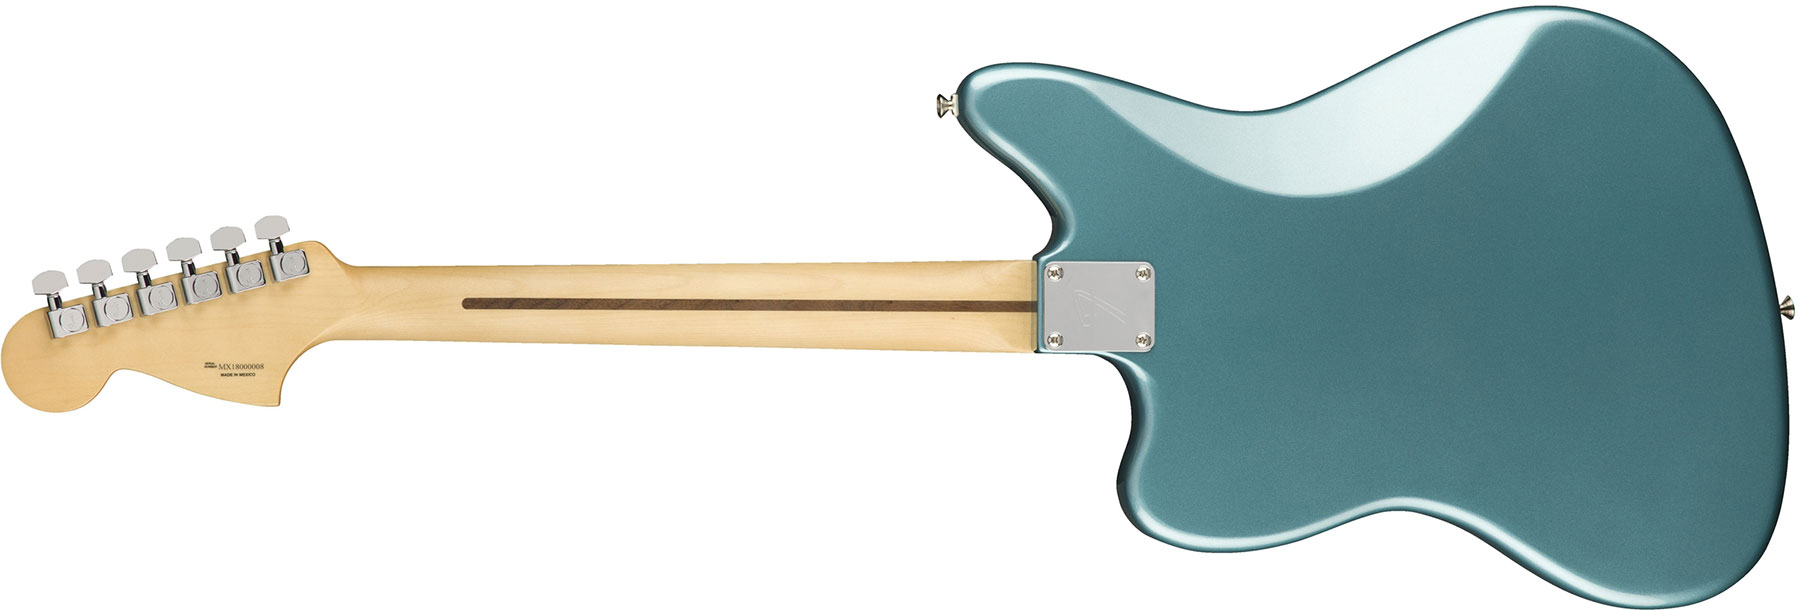 Fender Jaguar Player Mex Hs Trem Pf - Tidepool - Retro rock electric guitar - Variation 1